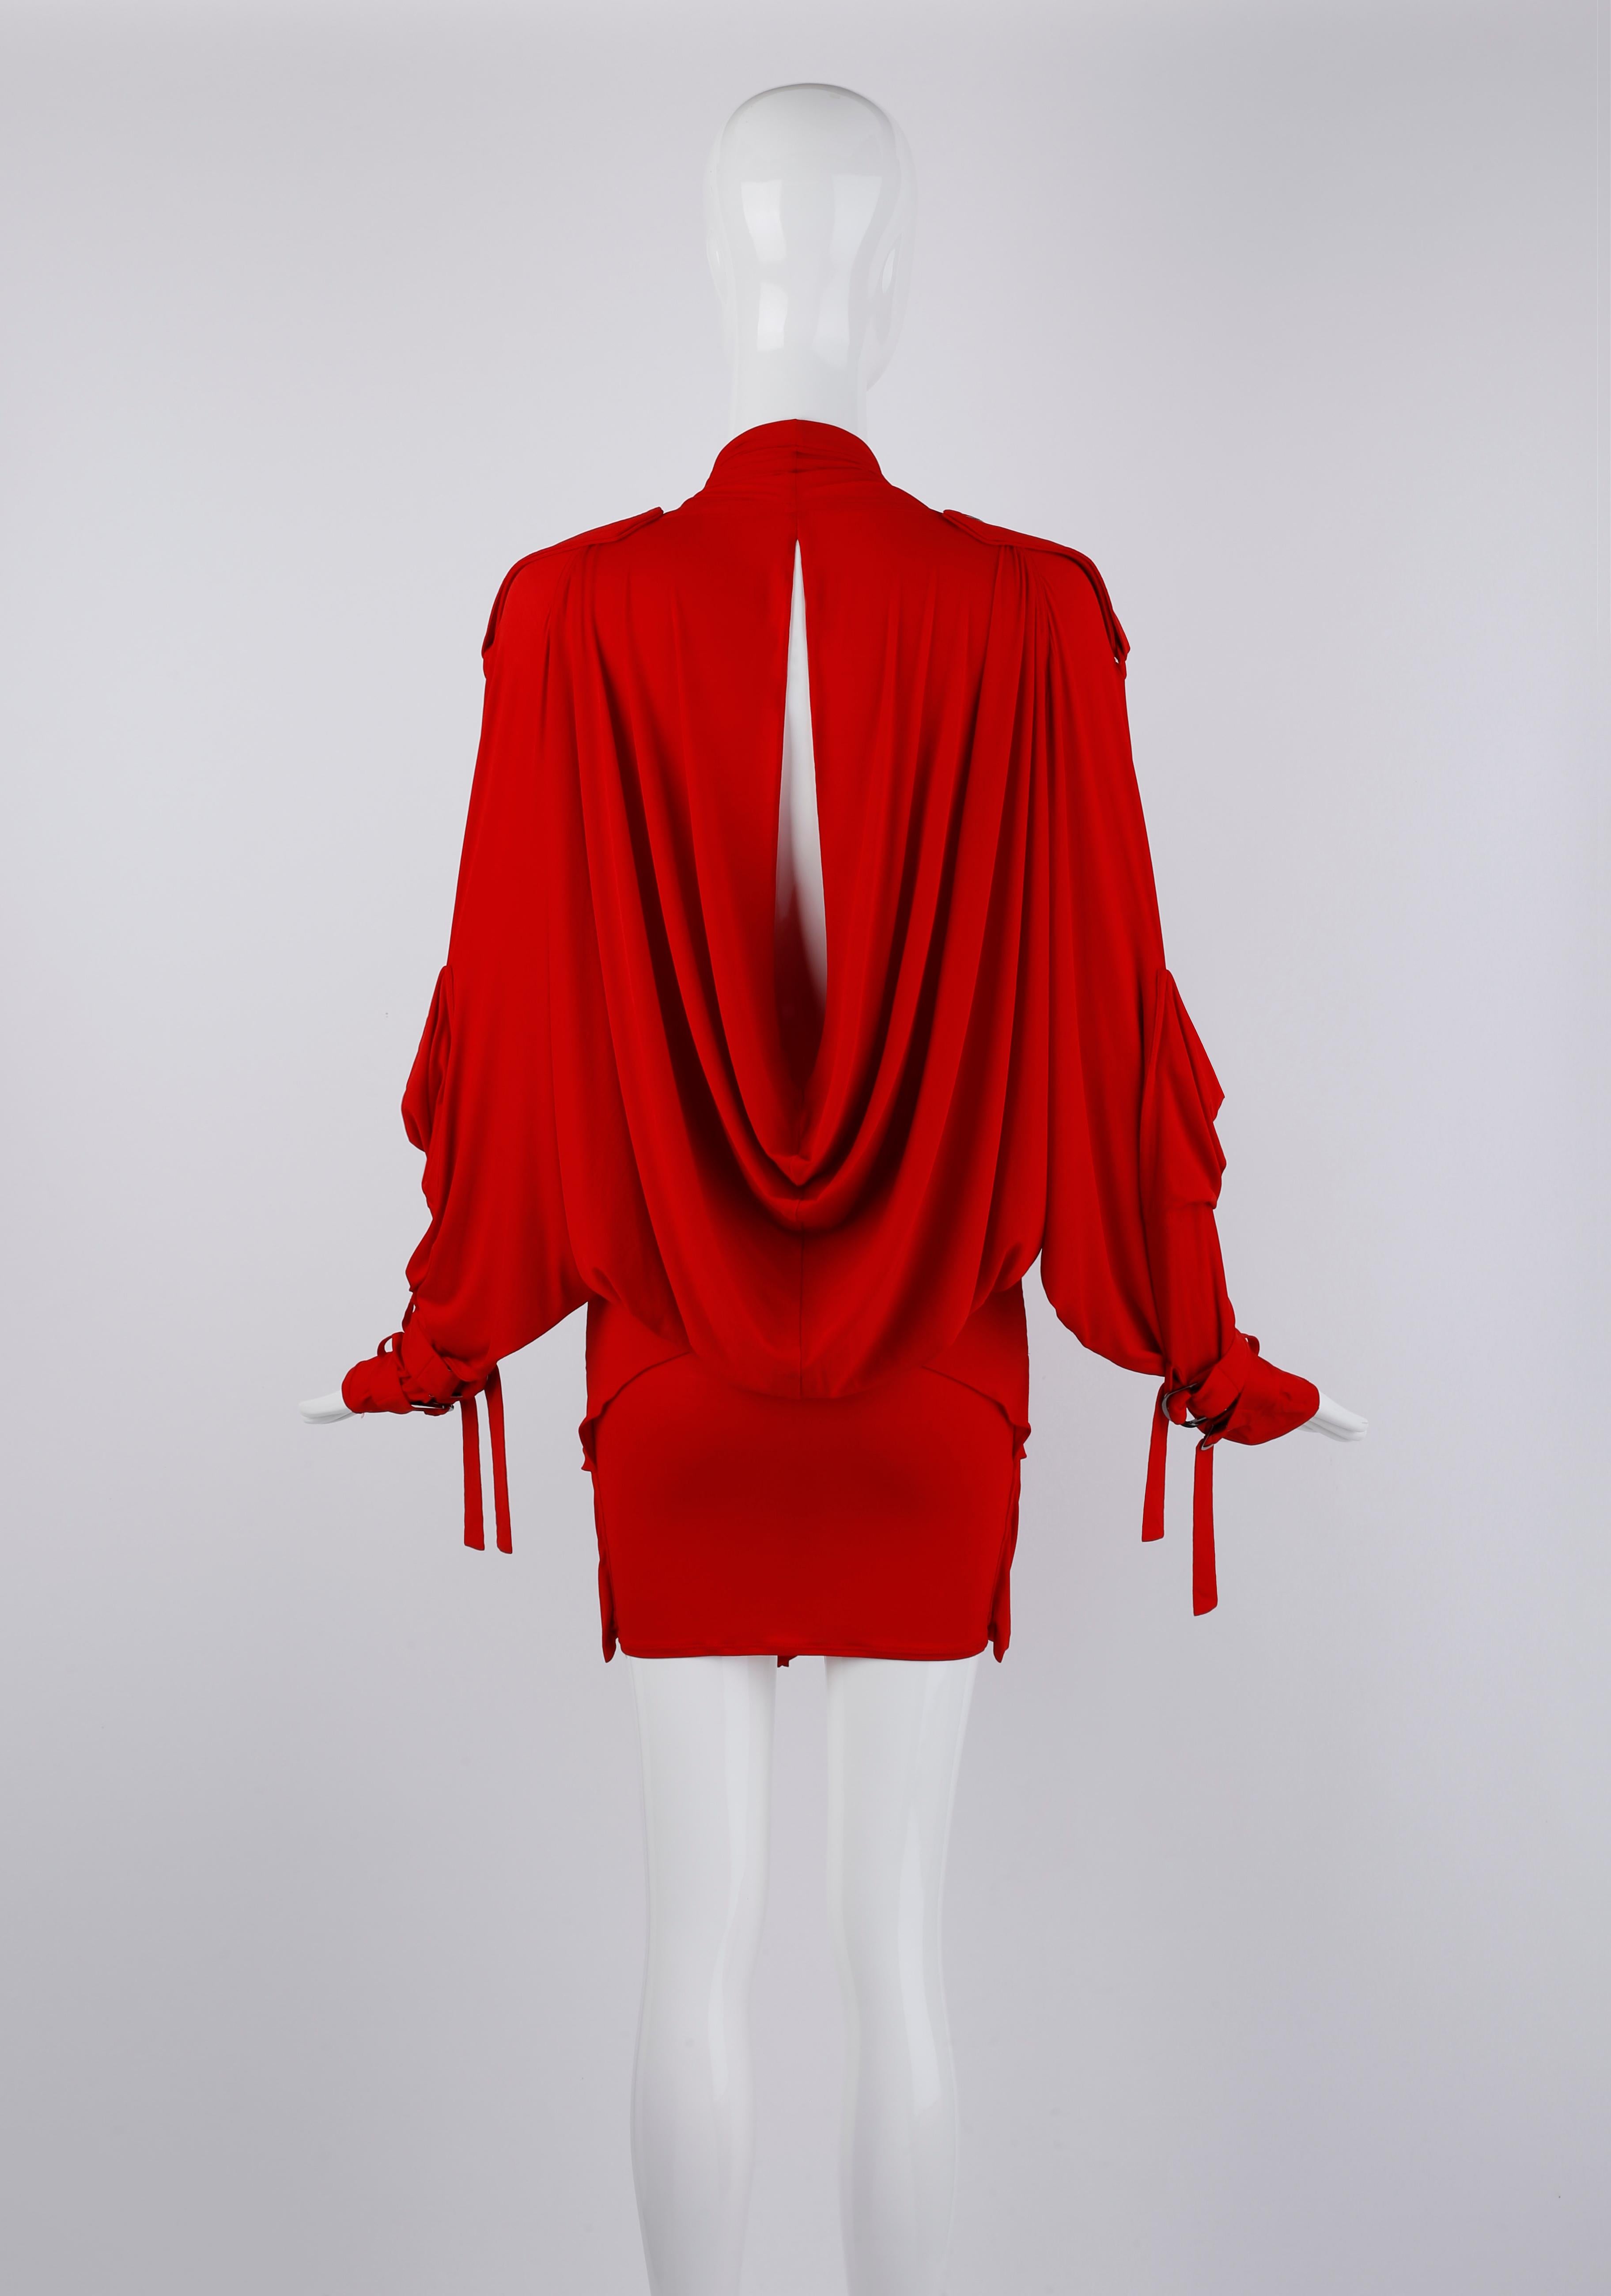 Christian Dior John Galliano S/S 2003 Red Plunge Draped Pocket Mini Dress For Sale 2